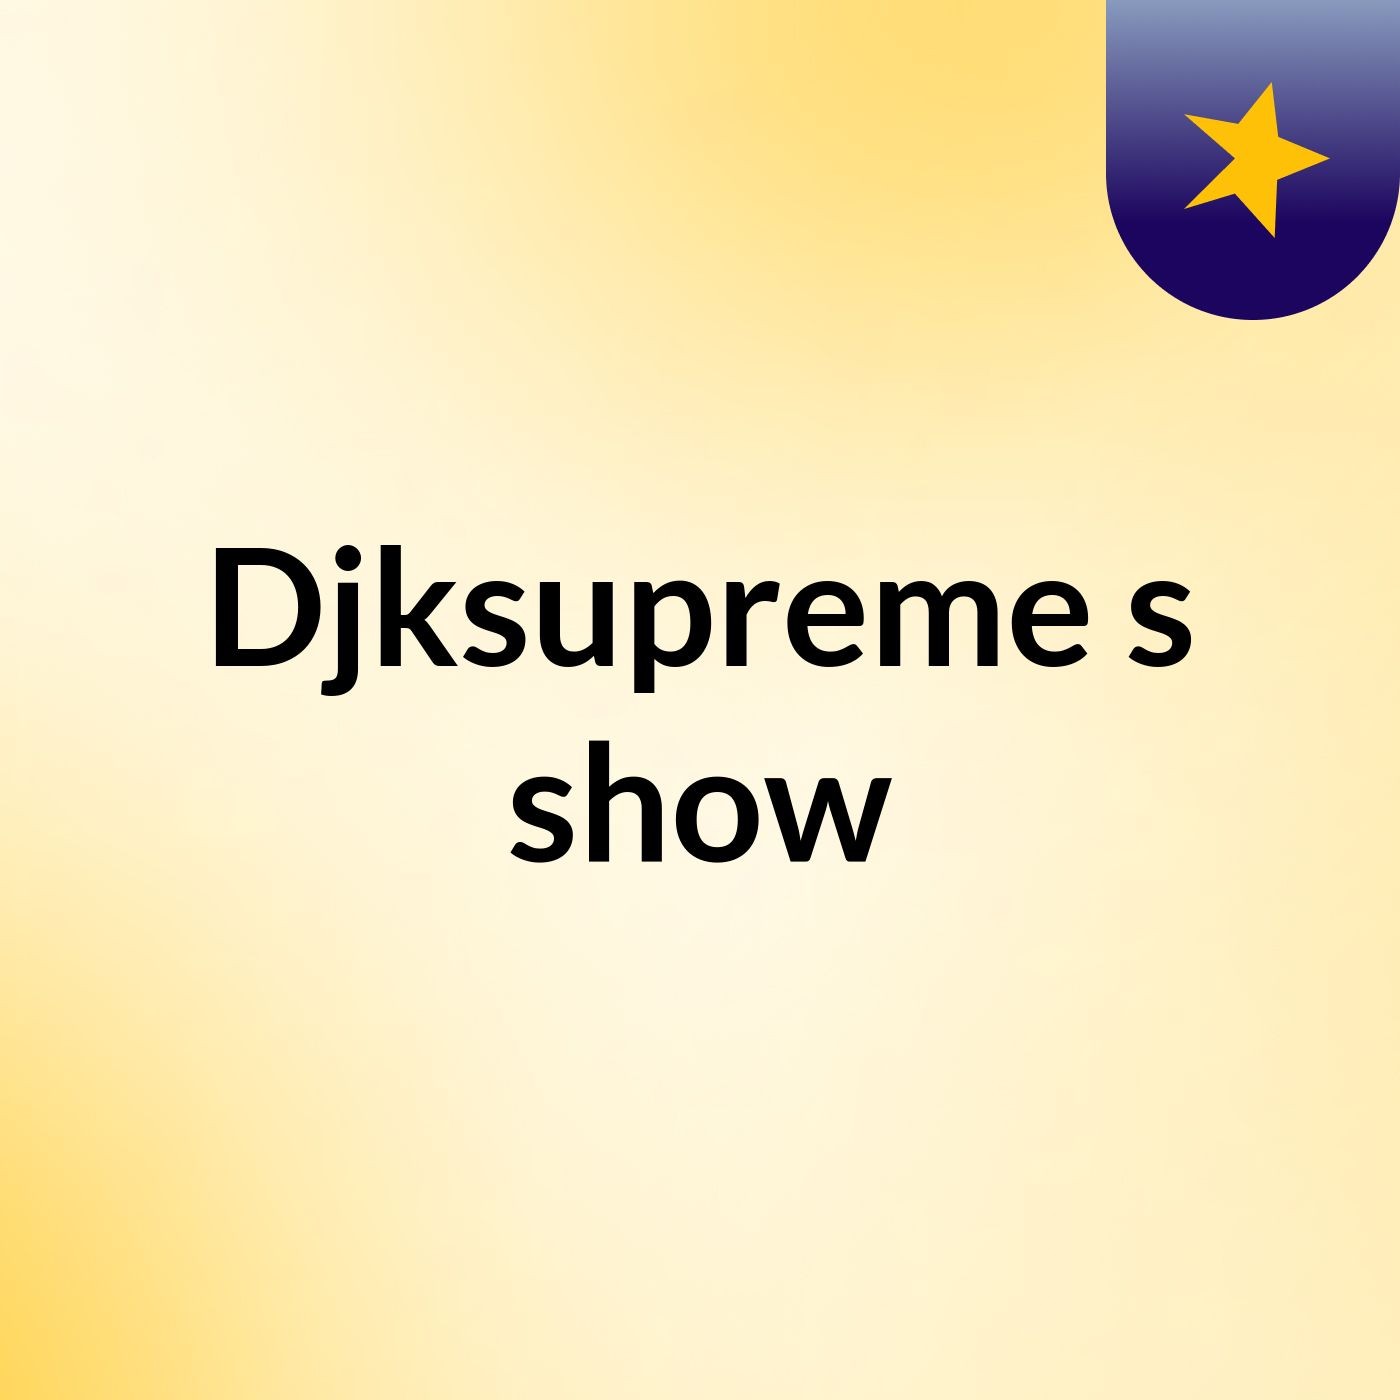 Djksupreme's show